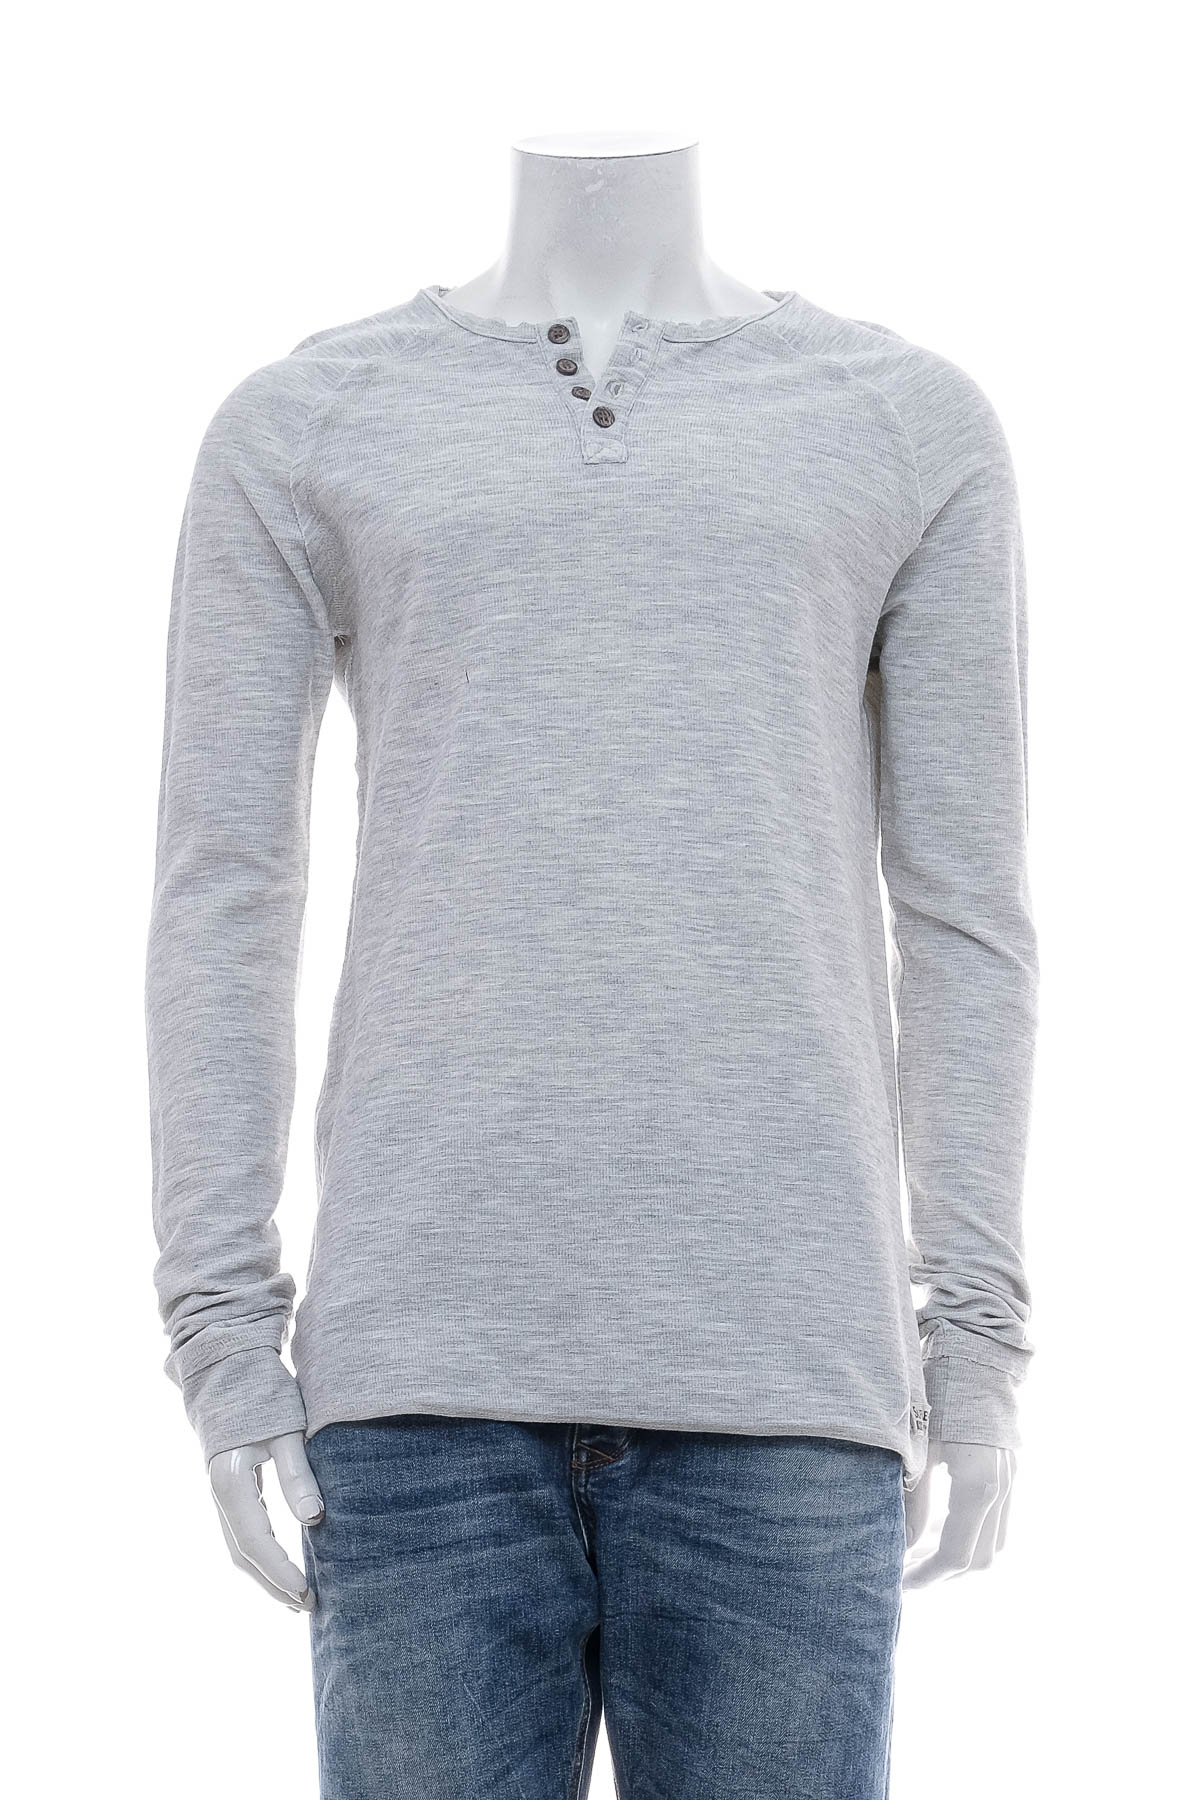 Men's sweater - SUBLEVEL - 0